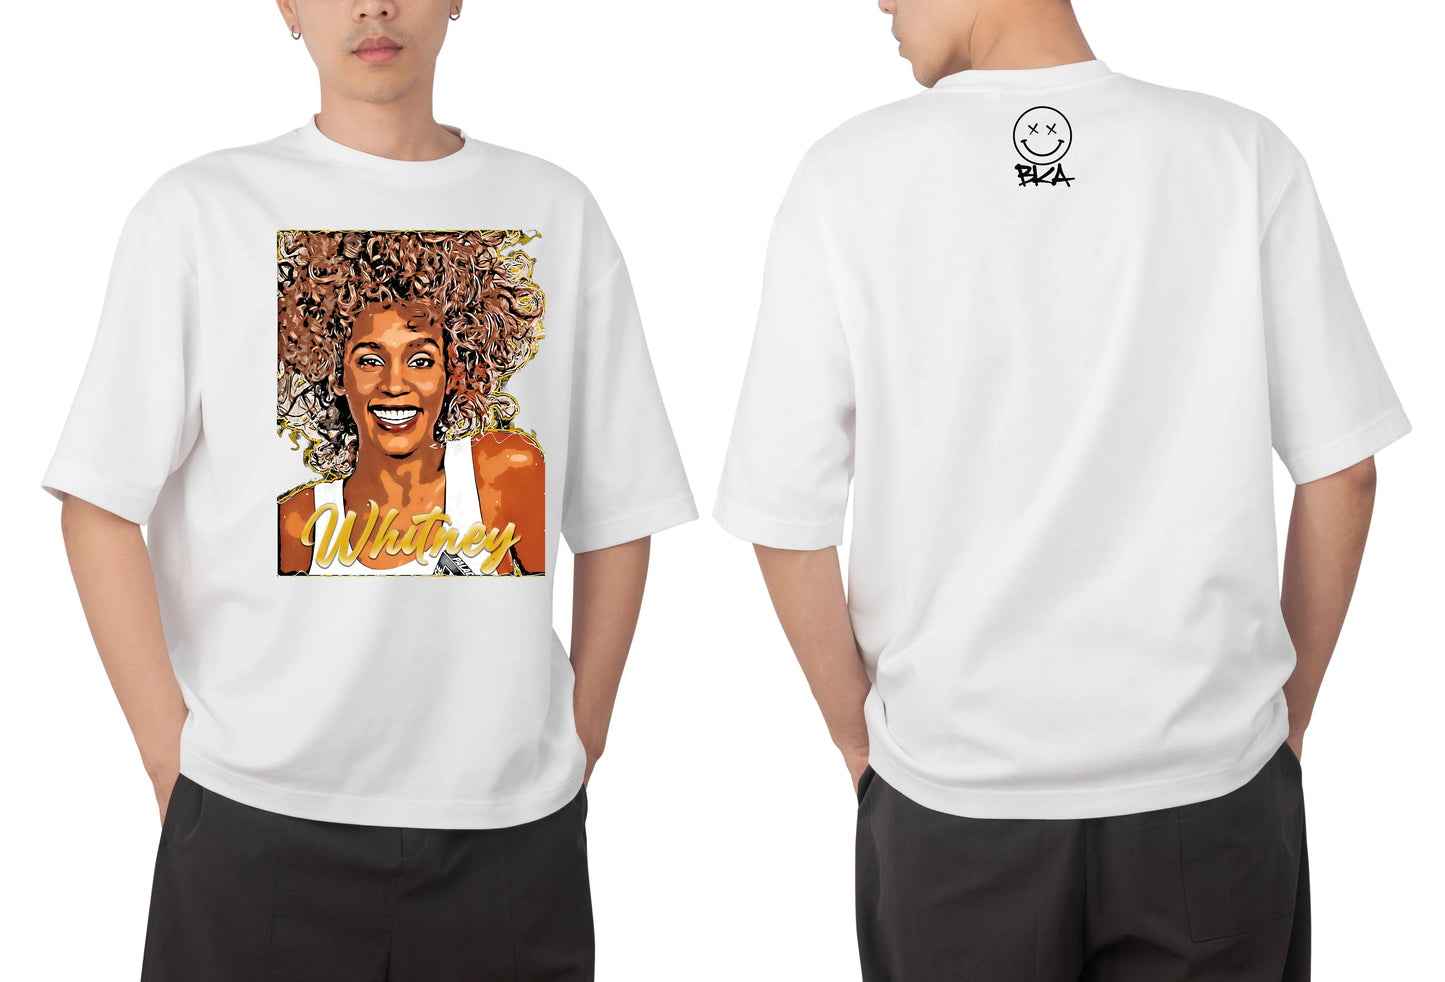 Whitney Houston graphic t-shirt